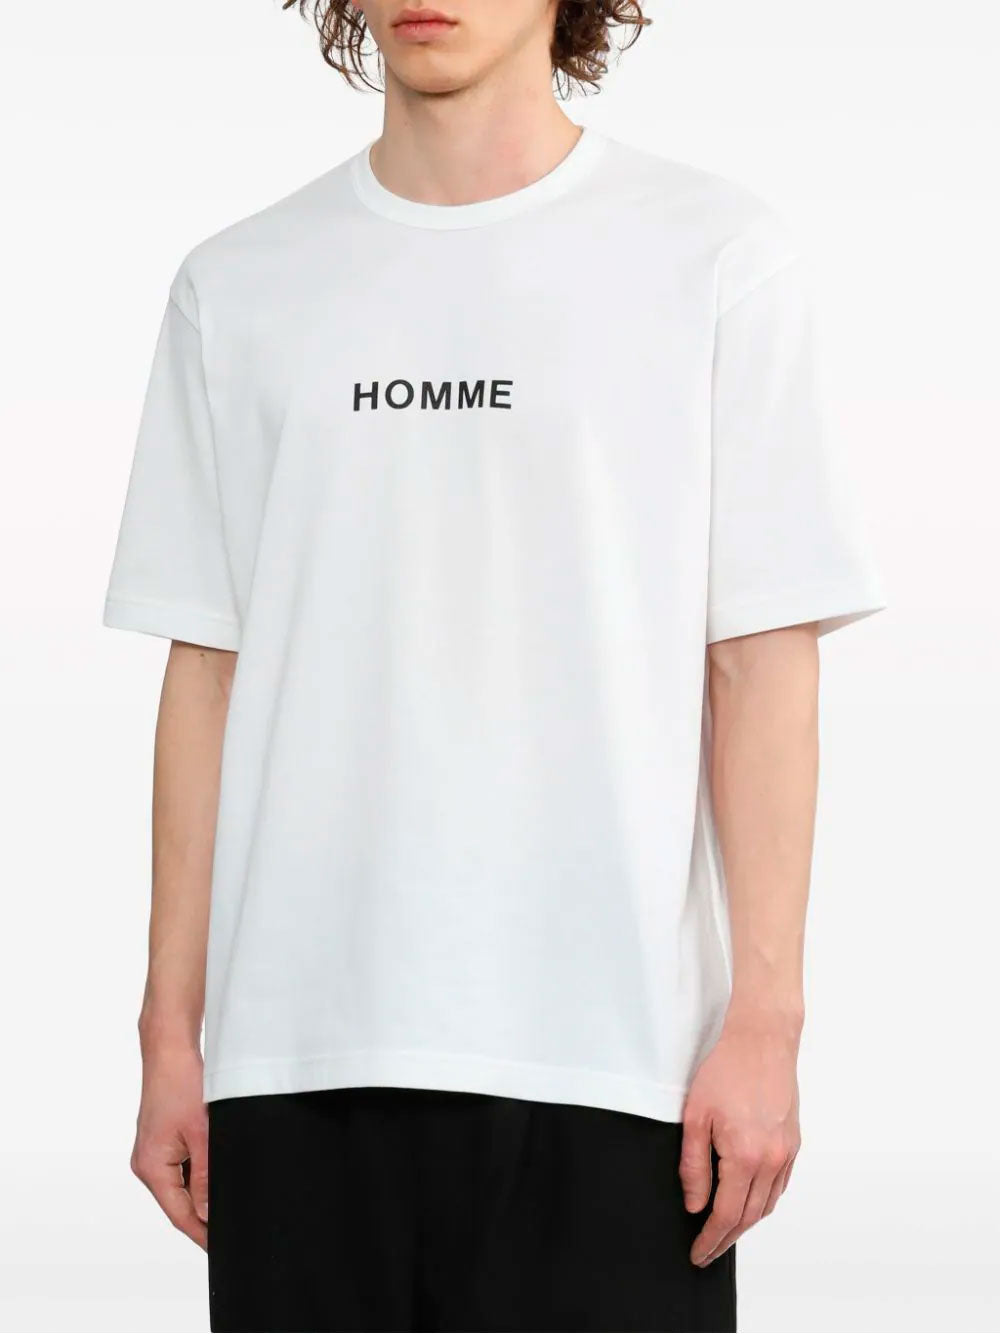 Homme-print t-shirt